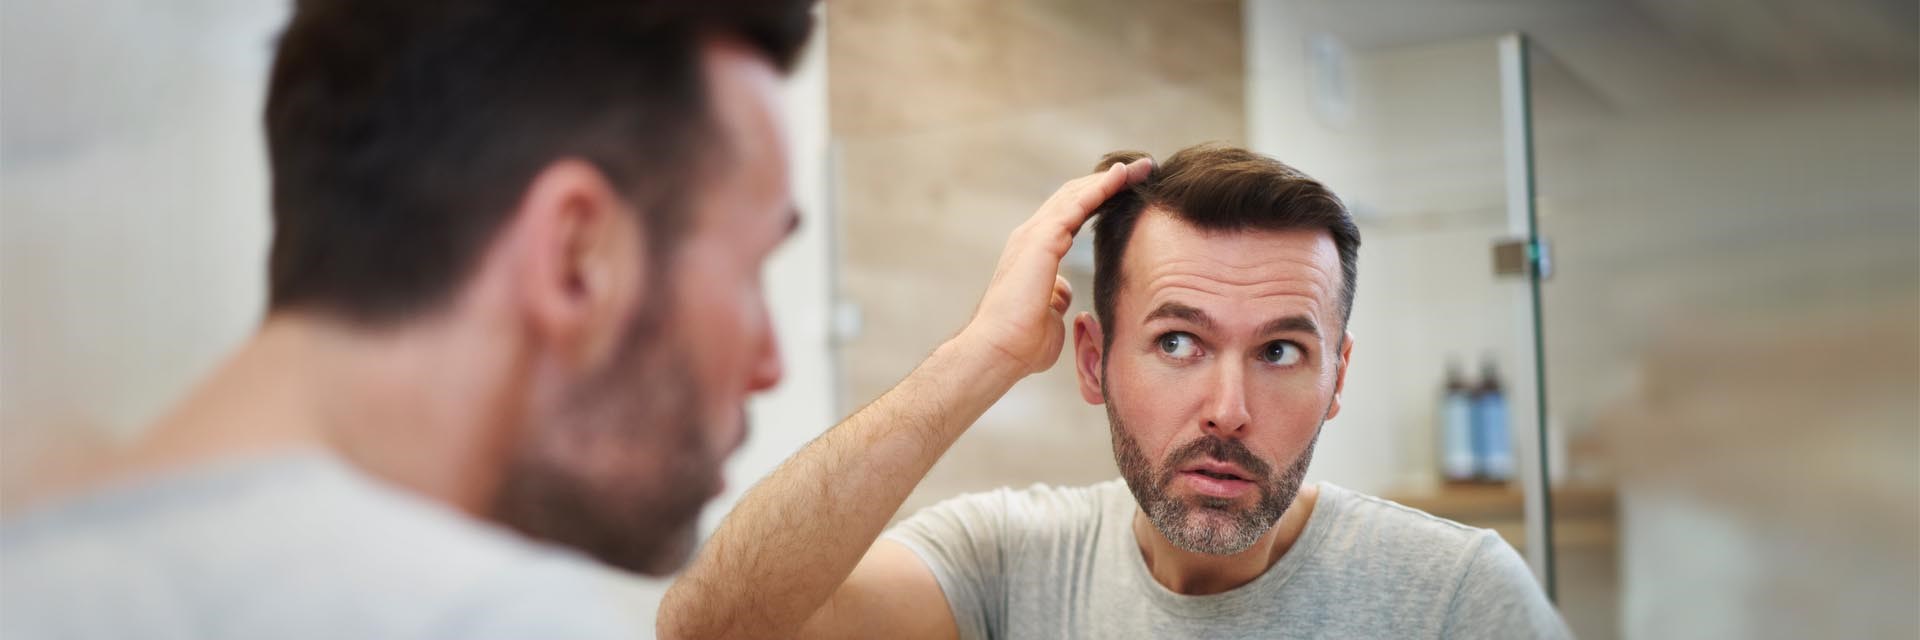 Man checking hair in mirror